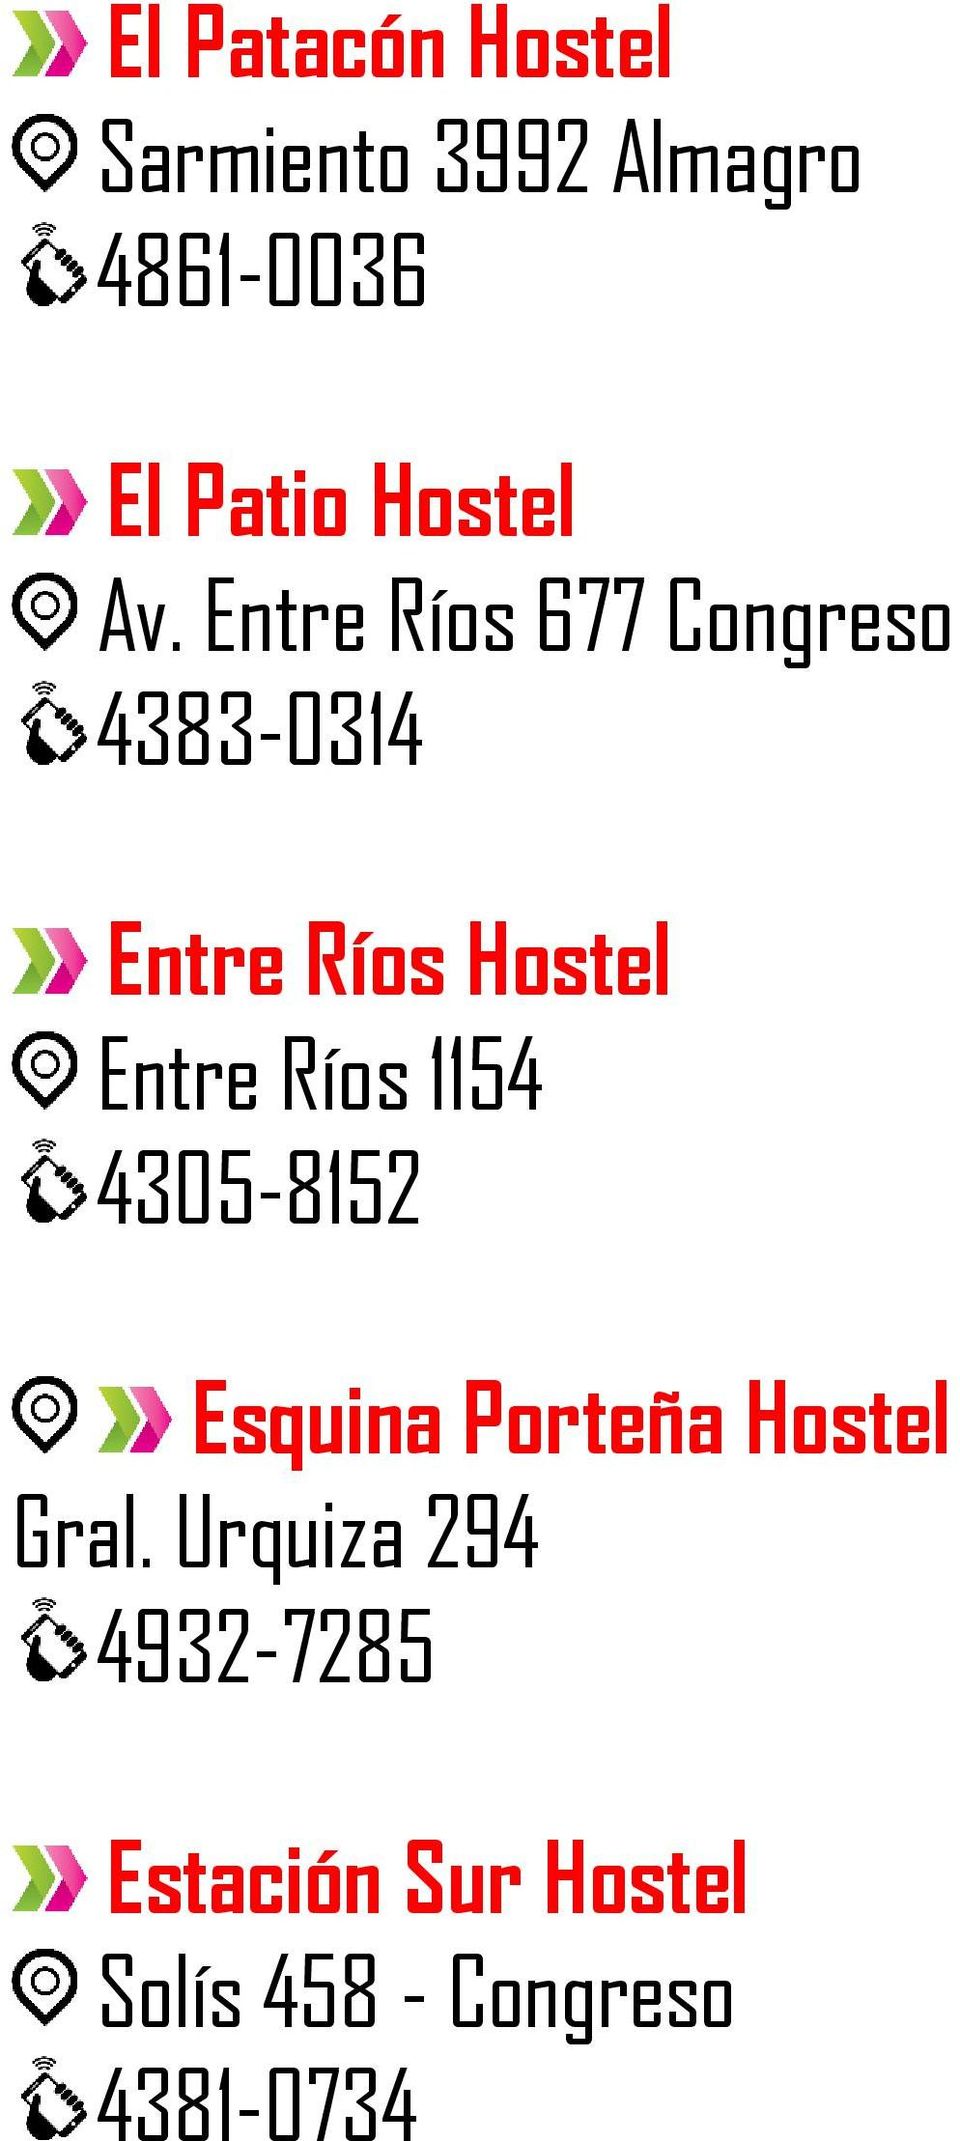 Entre Ríos 677 Congreso 4383-0314 Entre Ríos Hostel Entre Ríos